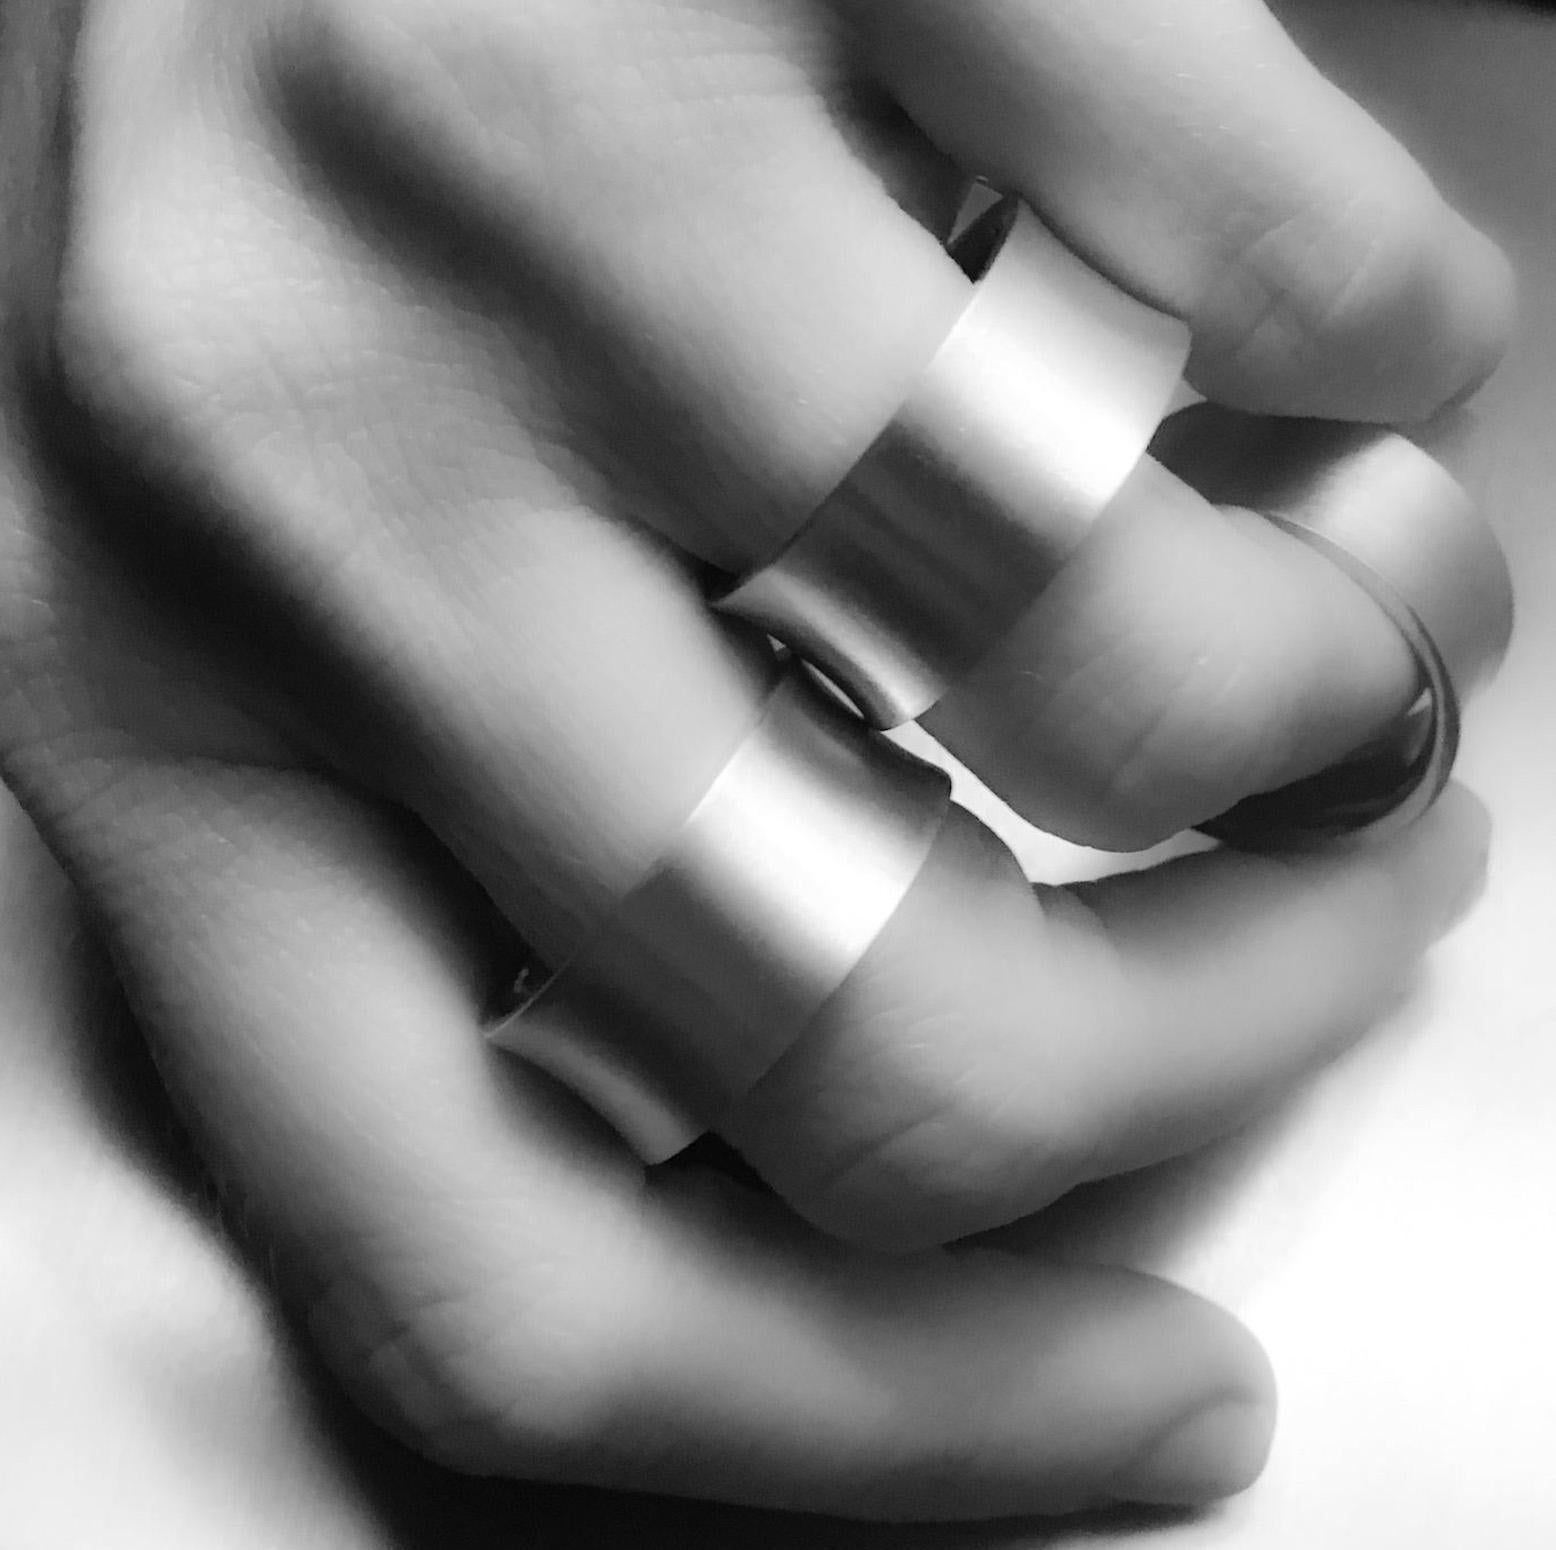 Virgo, Men's Wide Couture Sculptural Ring by Ashley Childs
Handmade item
Size: 9 US
Materials: Platinum
Band color: Silver
Description
Wide men's/unisex platinum or Sterling silver VIRGO ring, 0.40